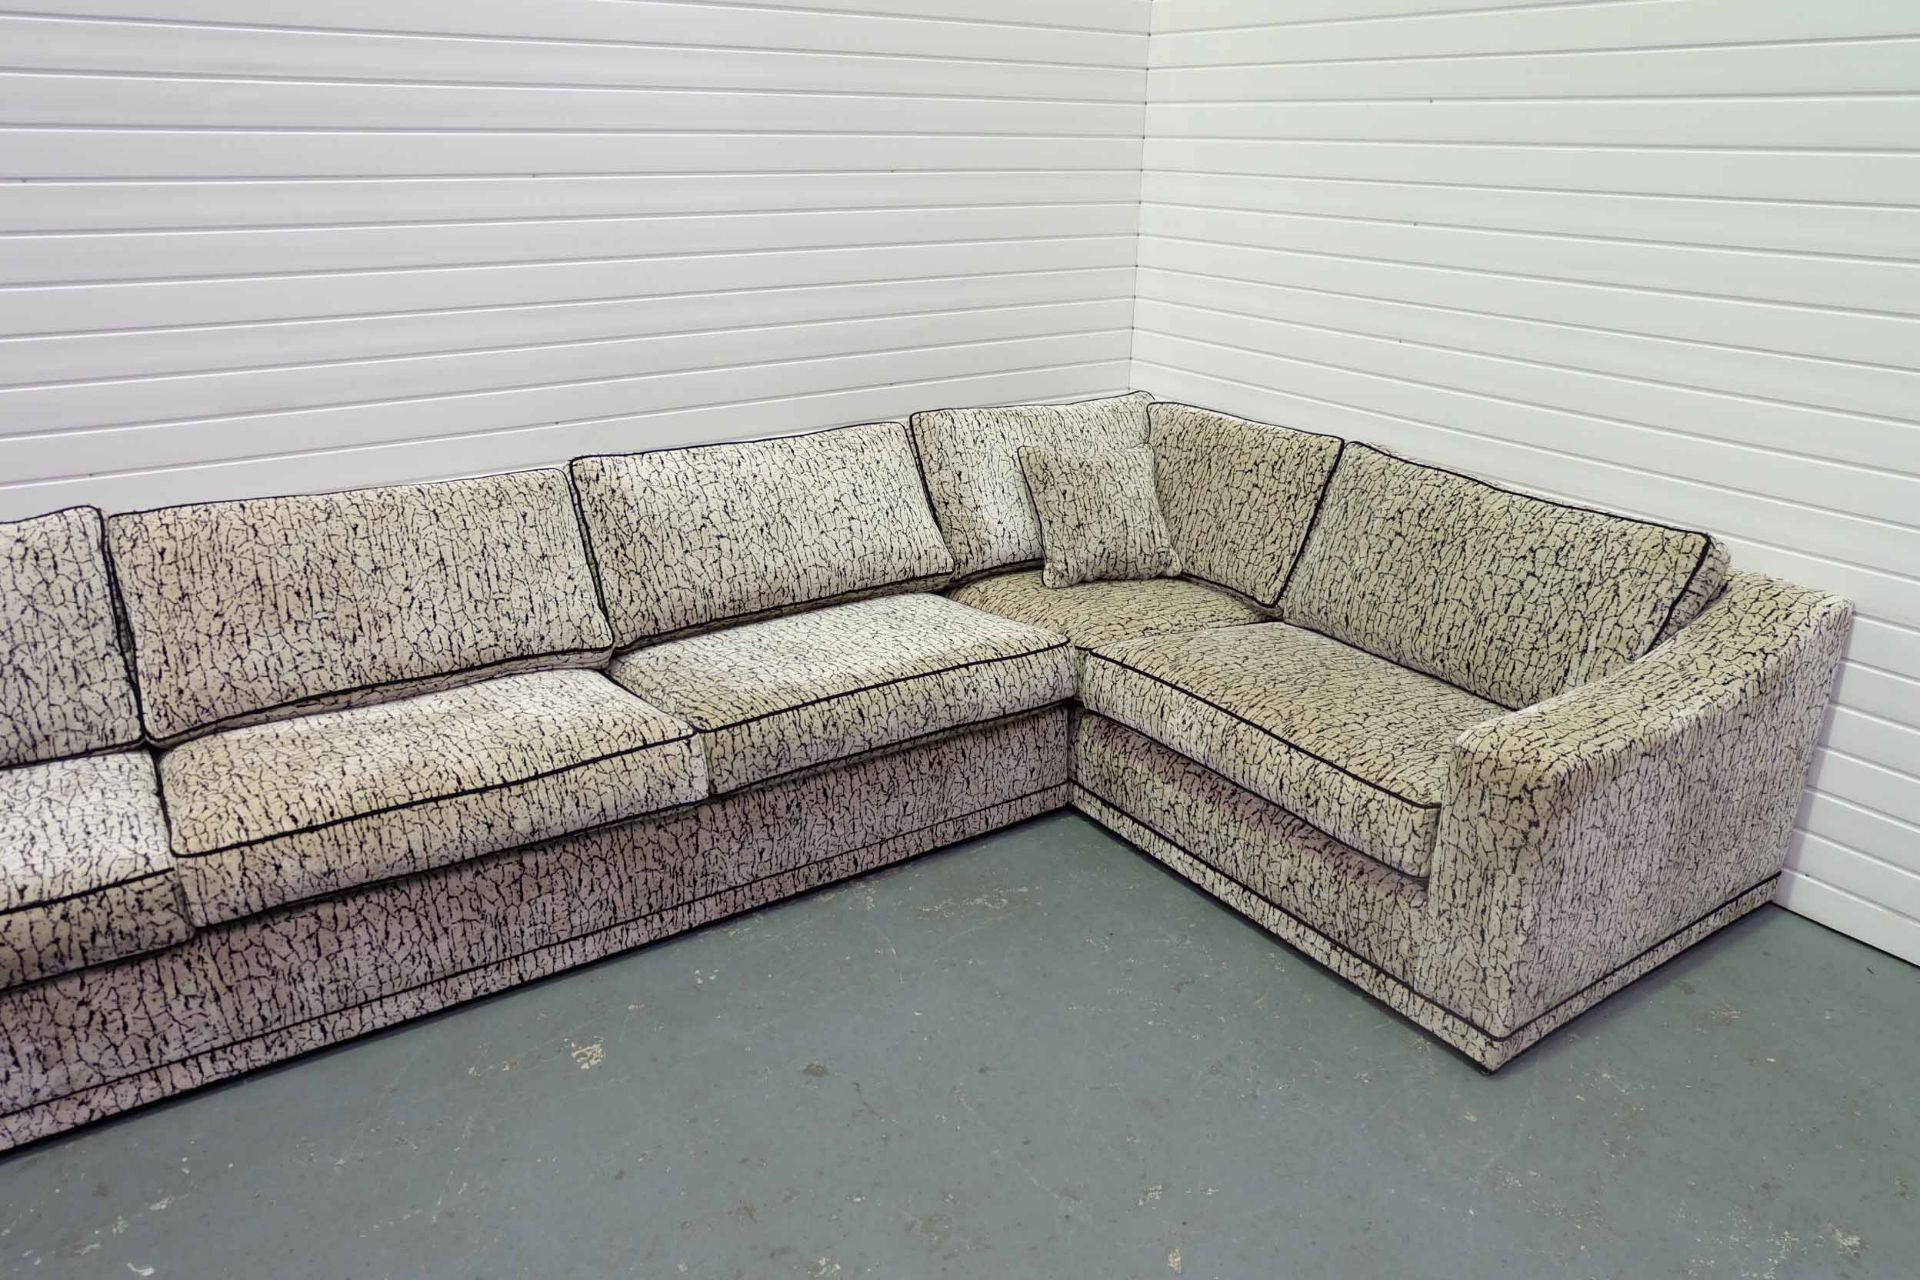 Gascoigne '5th Avenue' Range Sofa. Size 5m x 2.2m. - Image 2 of 6